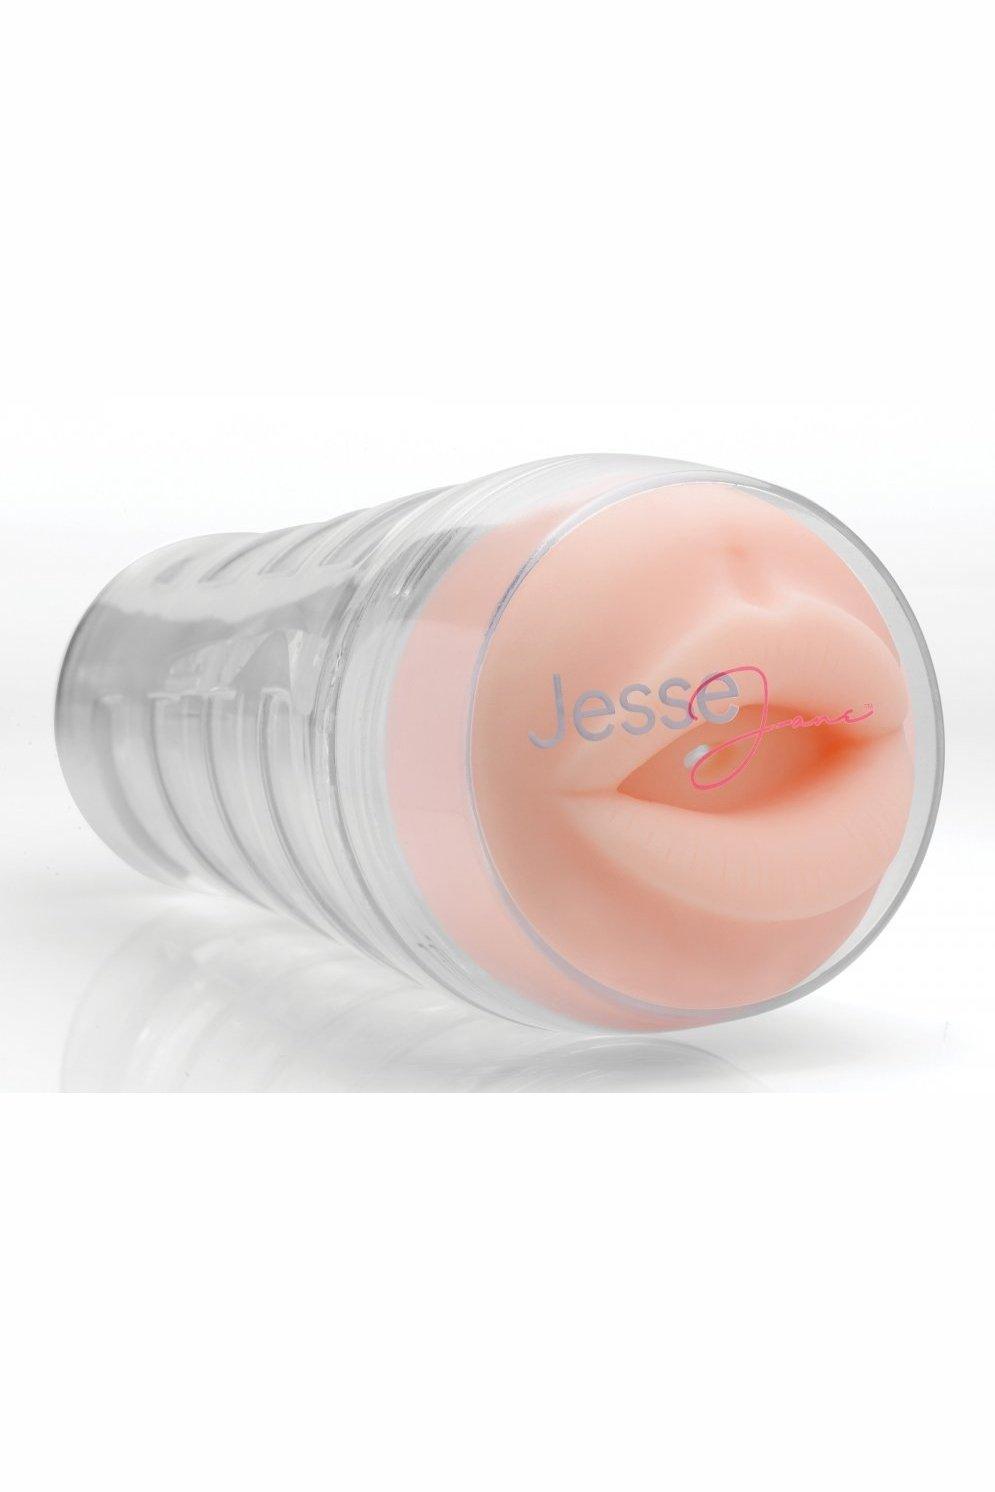 Jesse Jane Deluxe Mouth Stroker - Solé Resale Boutique thrift